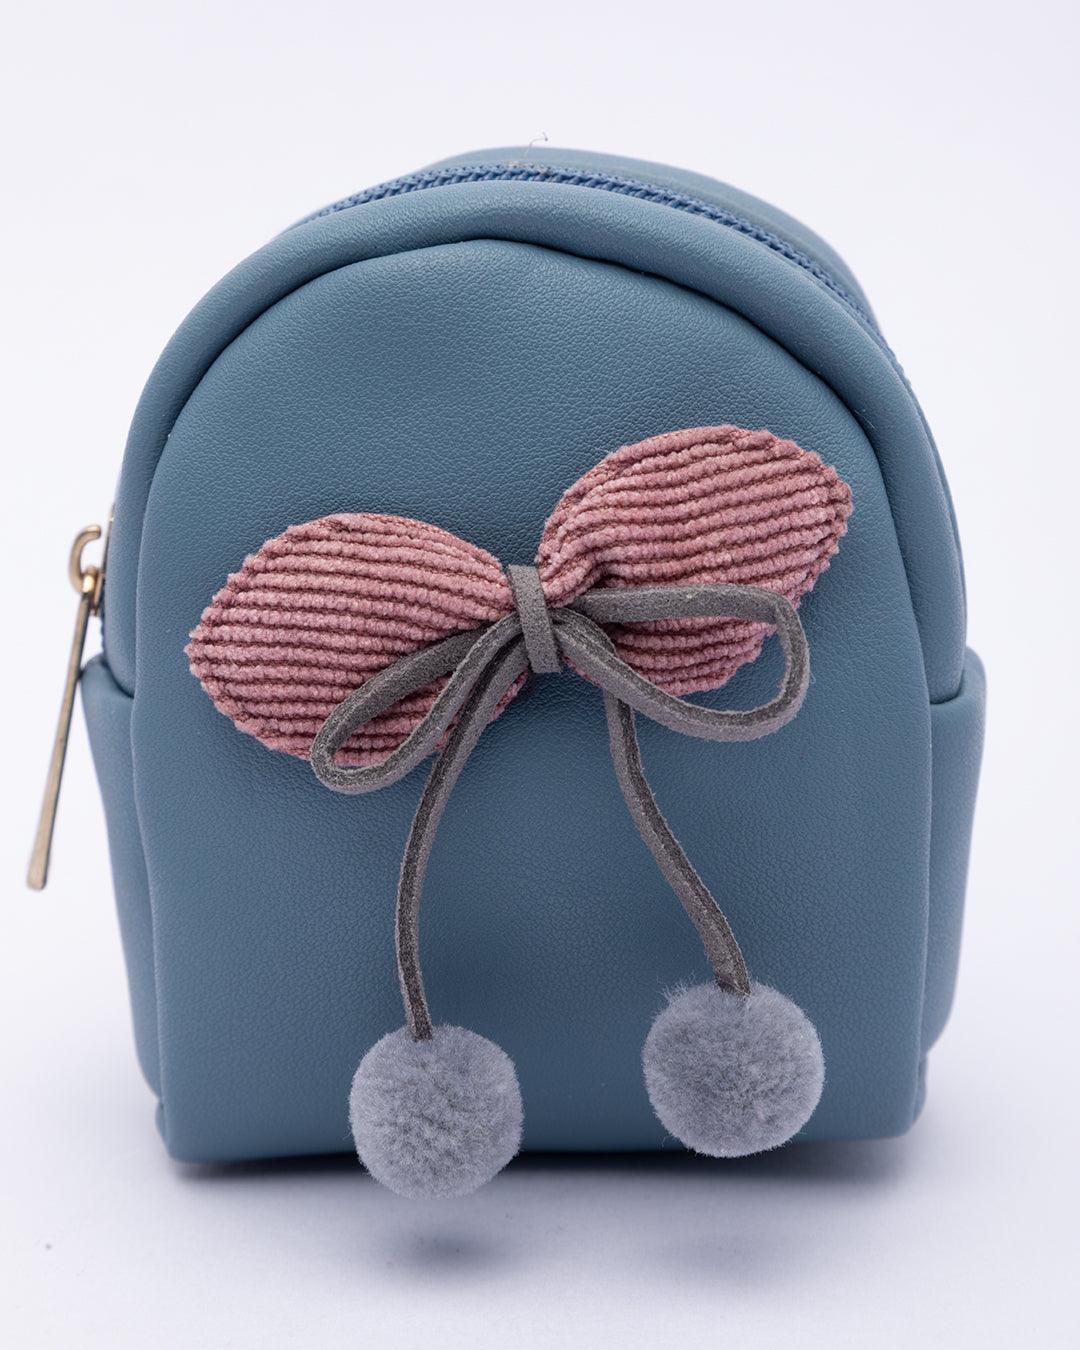 DIY Cute coin purse/Small zipper pouch tutorial/Free patterns/귀여운 동전지갑  만들기/패턴공유 #Shorts - YouTube